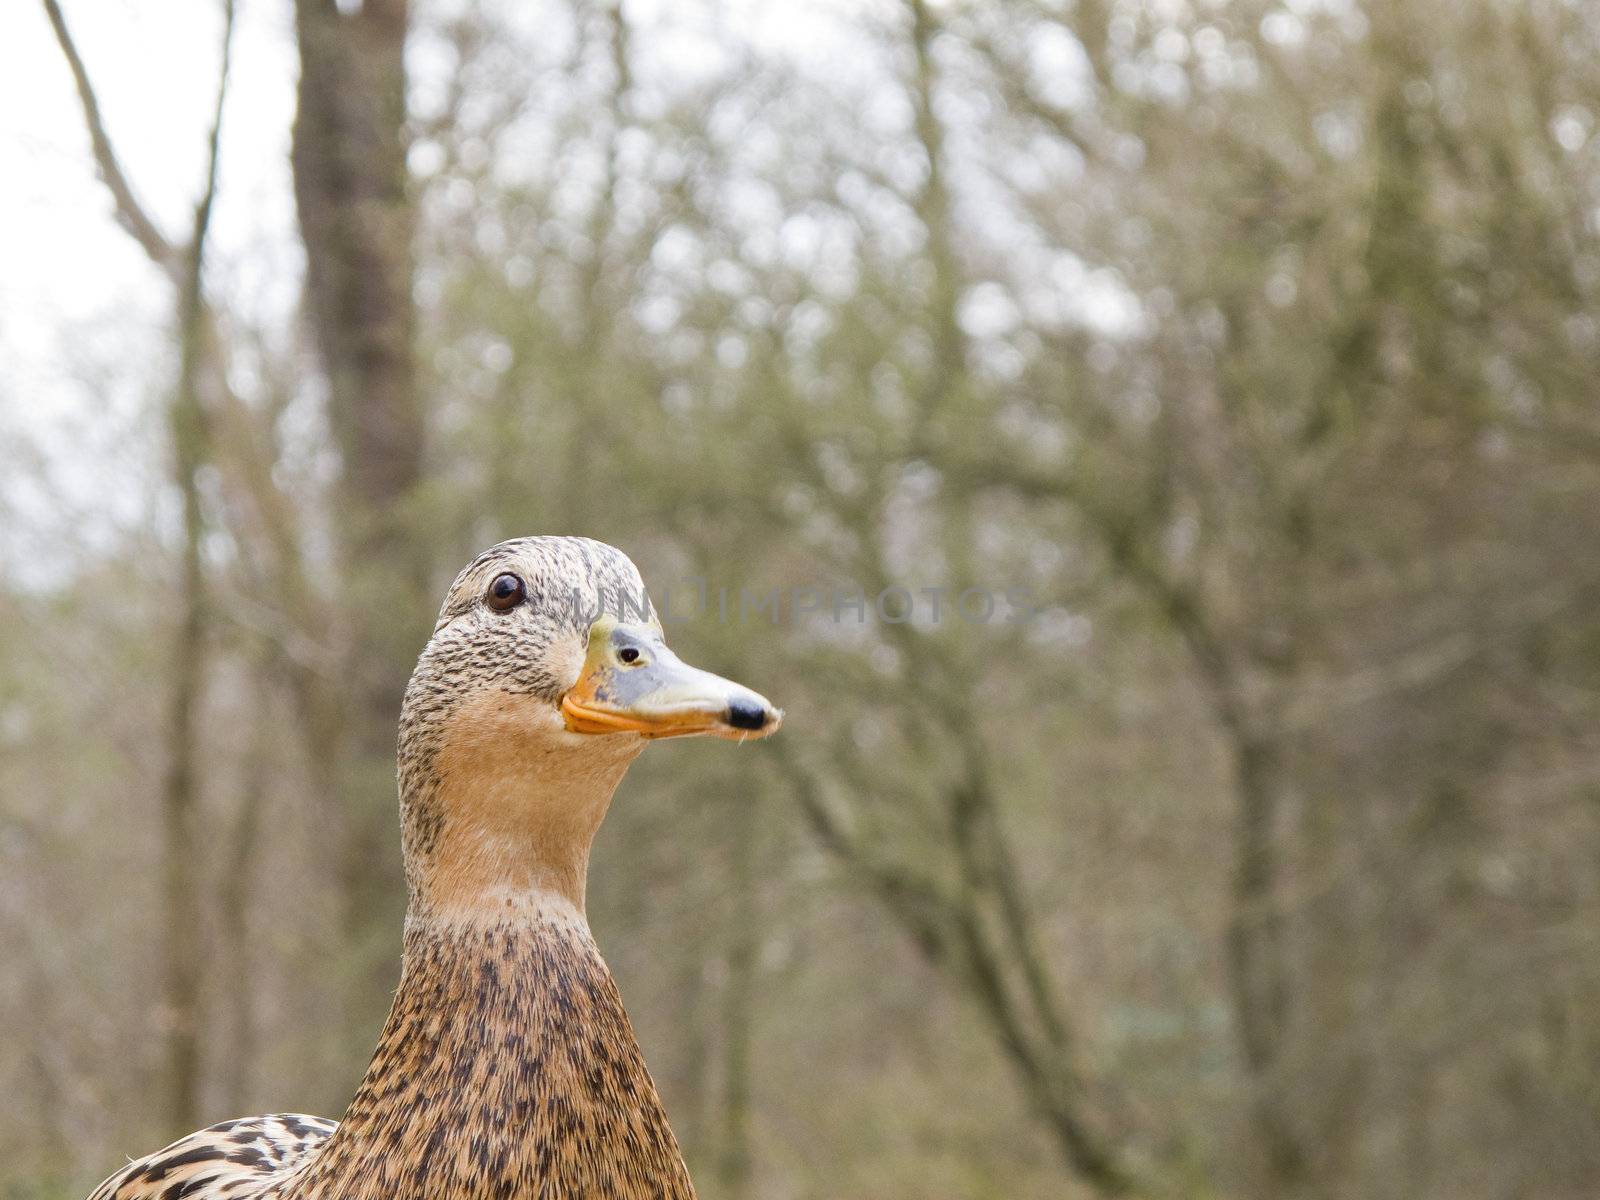 female mallard duck - Anas platyrhynchos in spring on land 